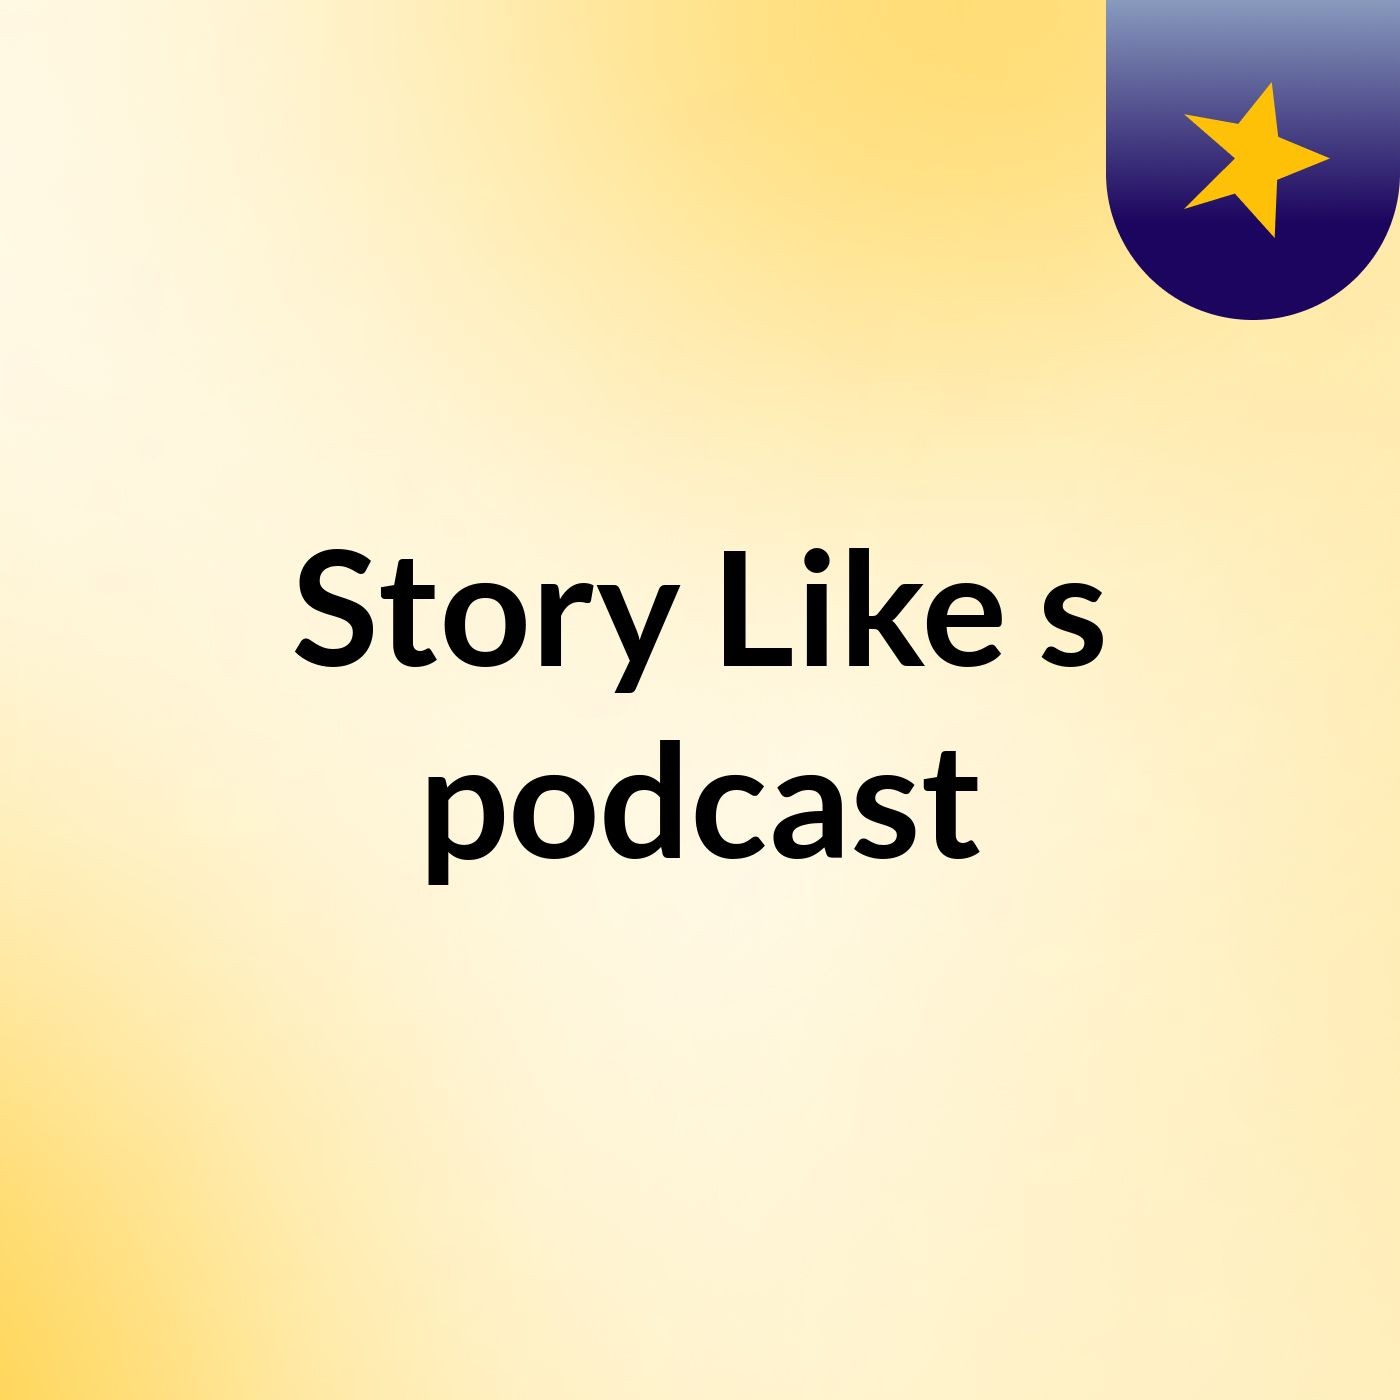 Story Like's podcast